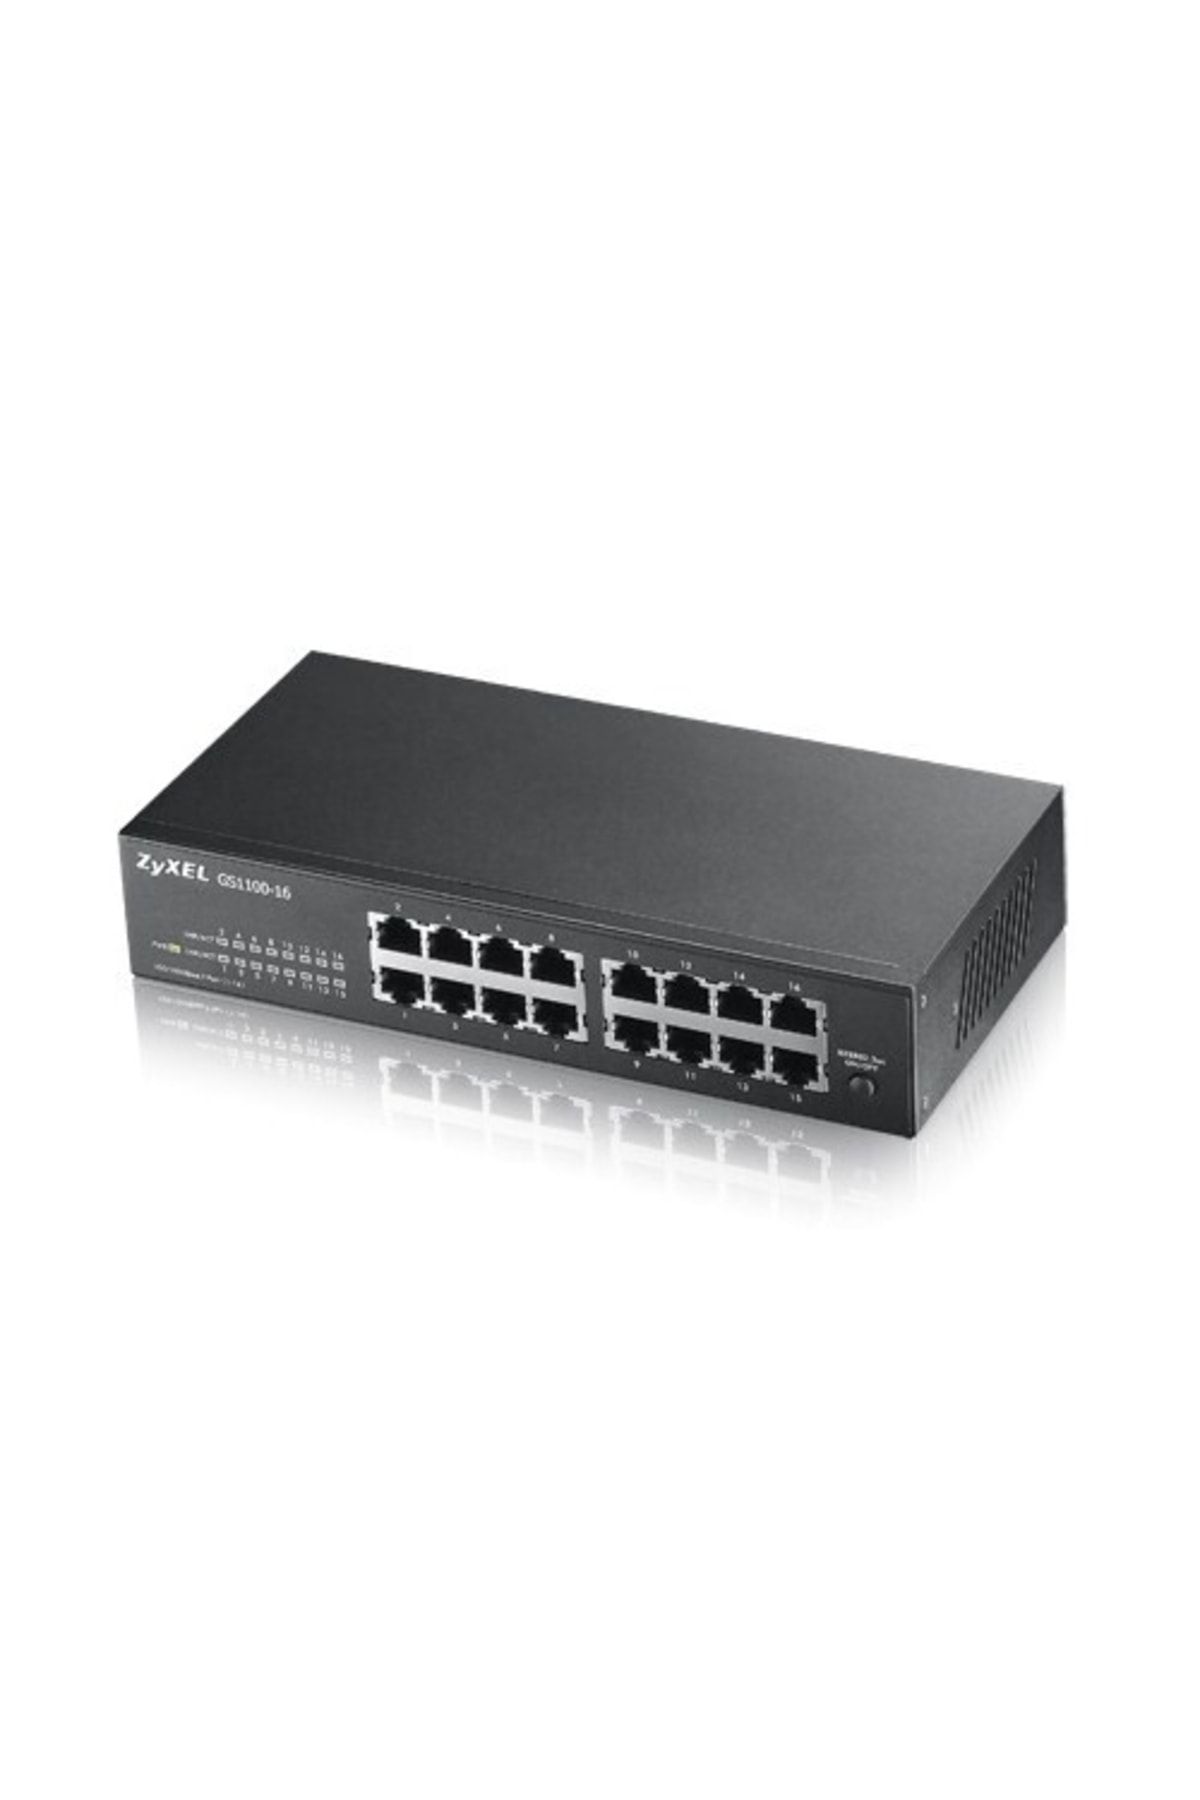 Zyxel Gs1100-16 16 Port 10-100-1000 Mbps Switch